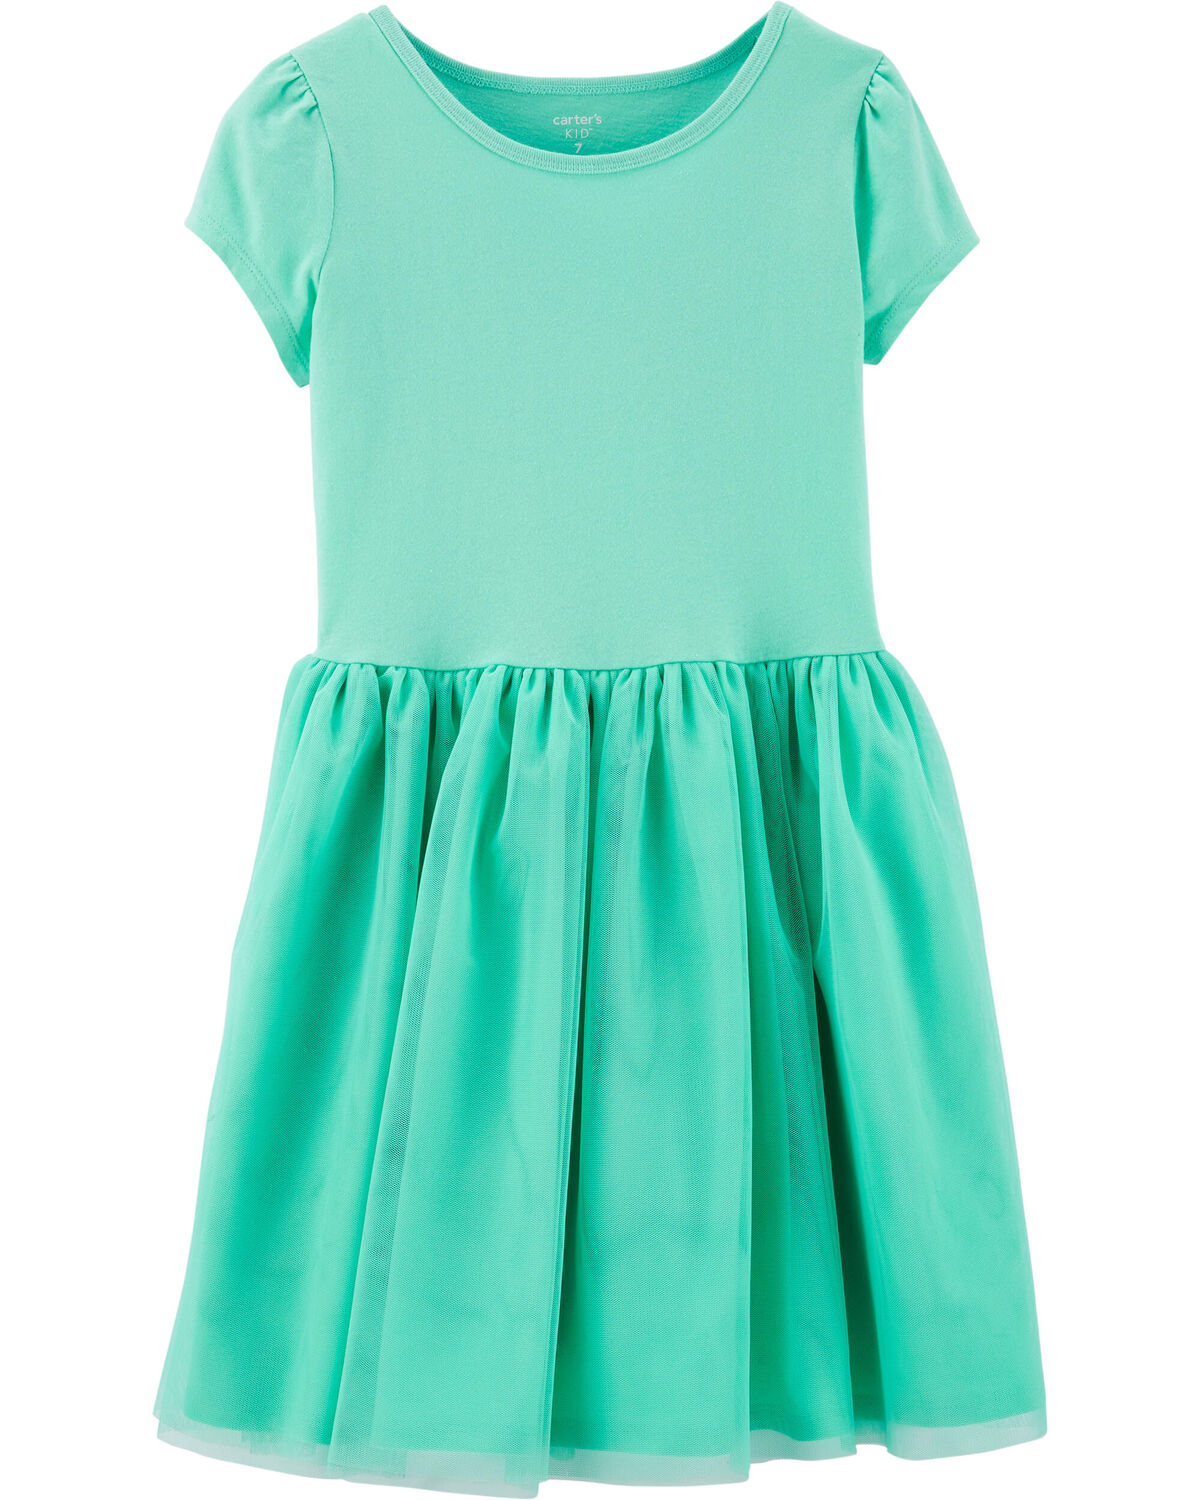 Turquoise Kid Tutu Jersey Dress | carters.com